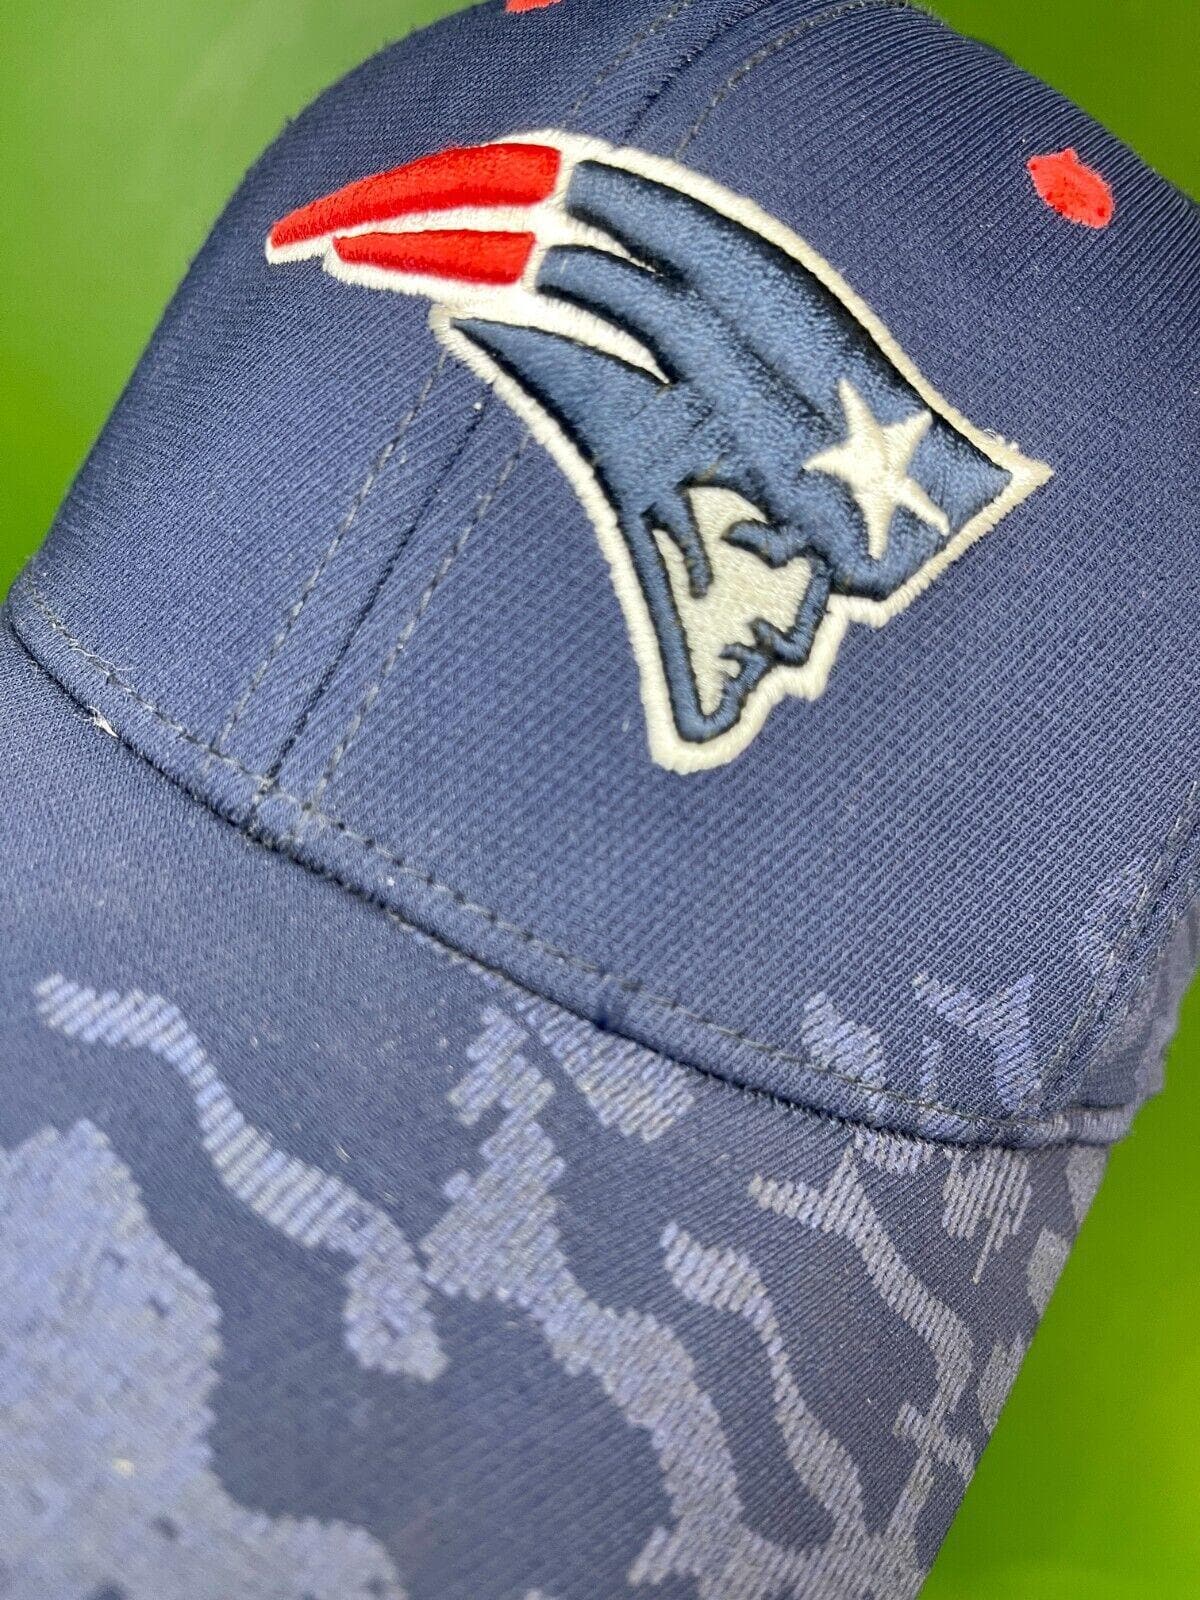 NFL New England Patriots Baseball Hat Cap Camo Peak OSFA Youth